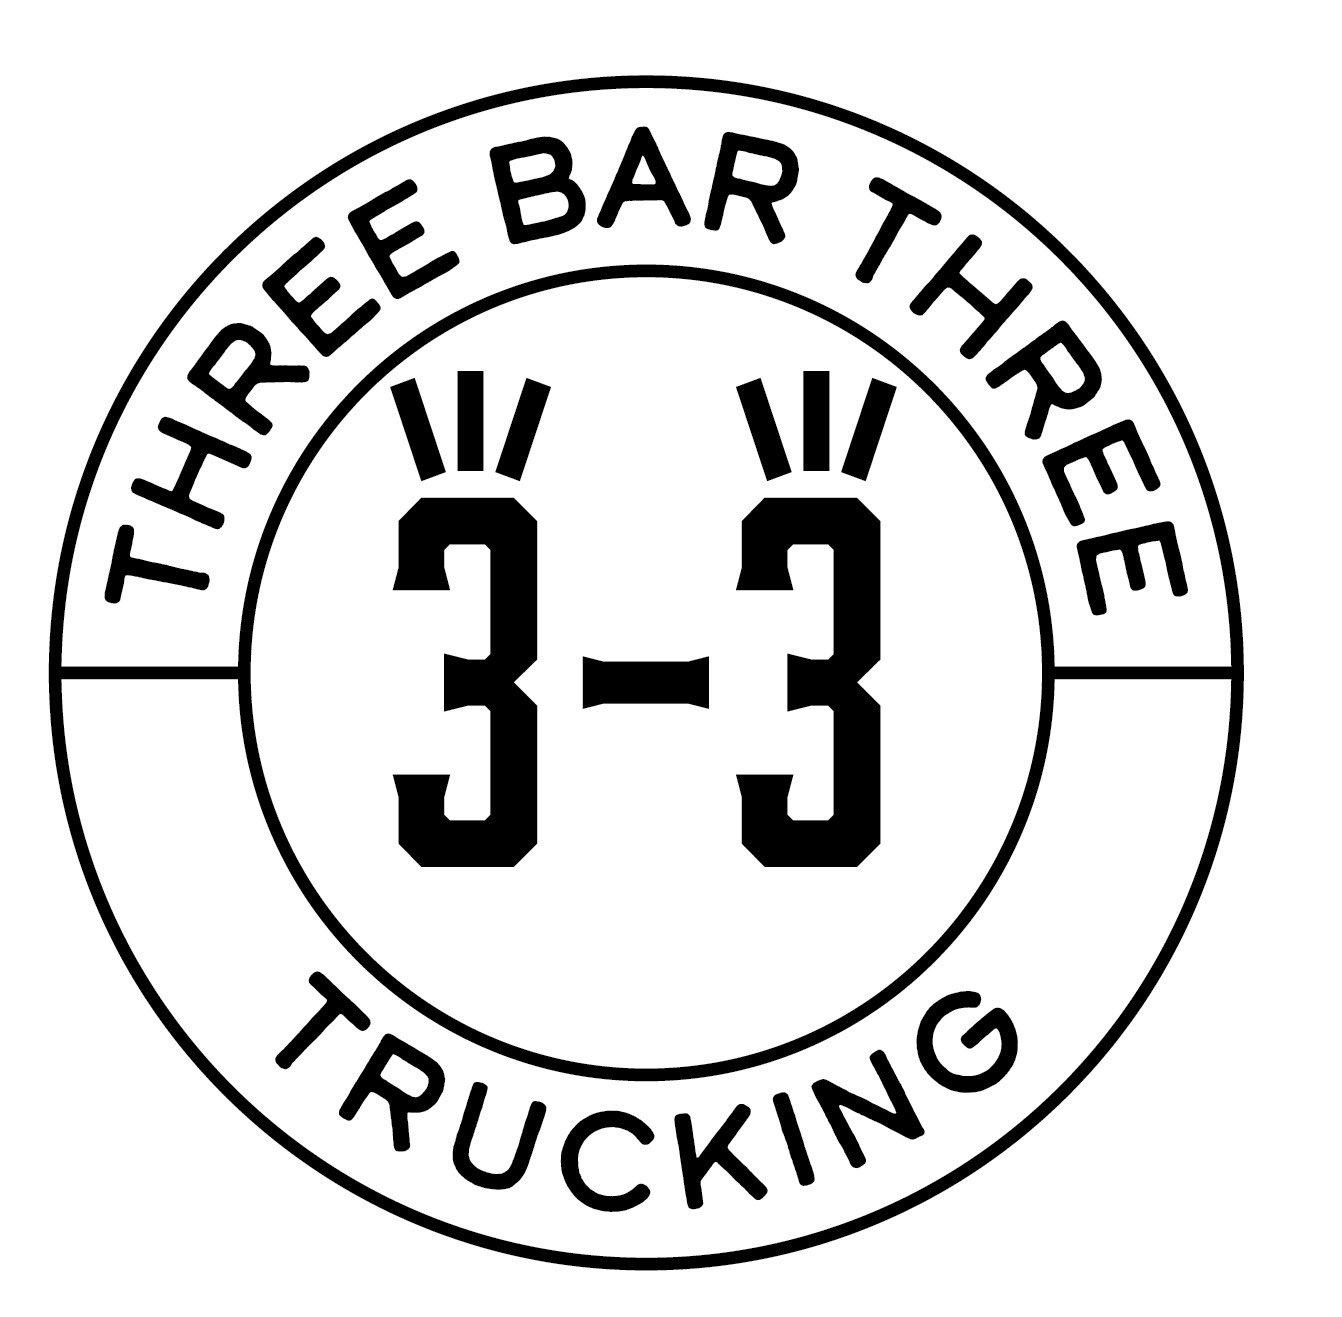 3bar3 trucking.jpg